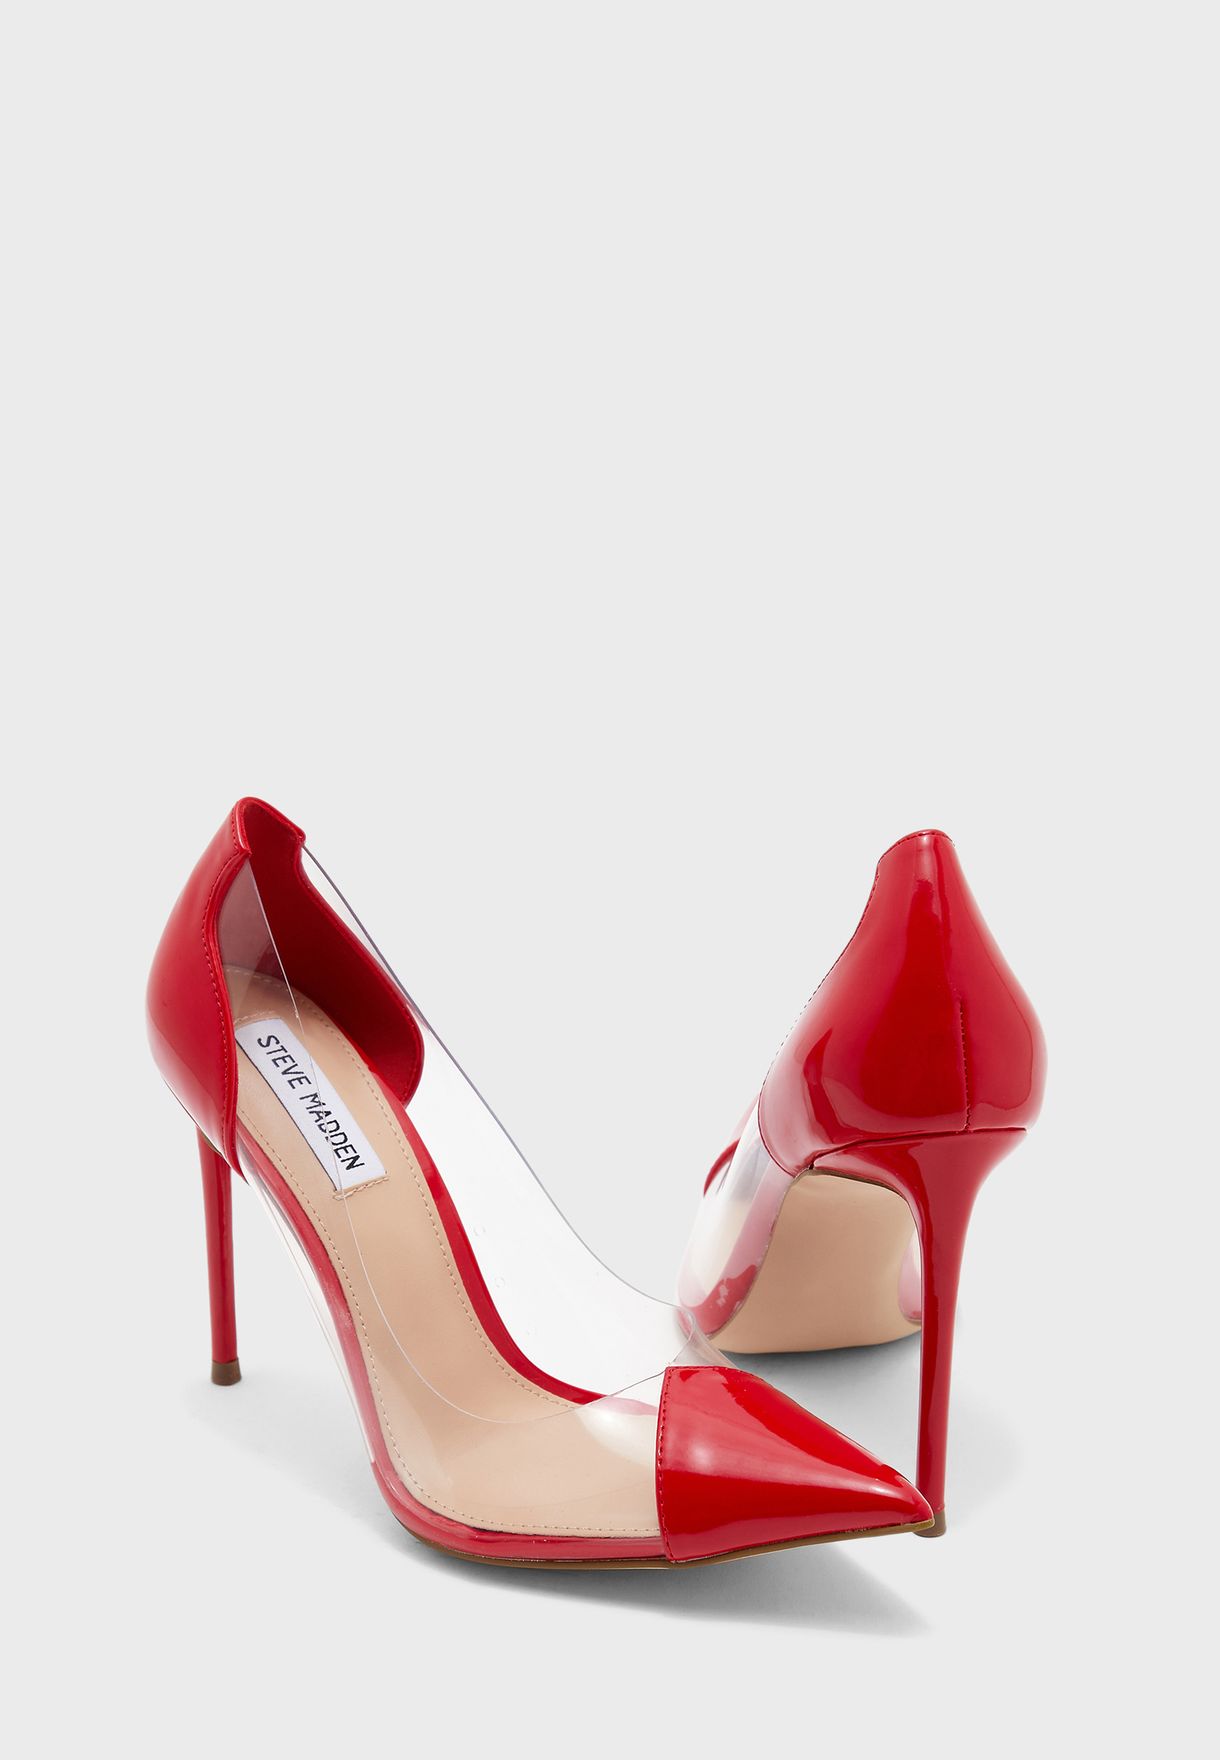 steve madden red strappy heels